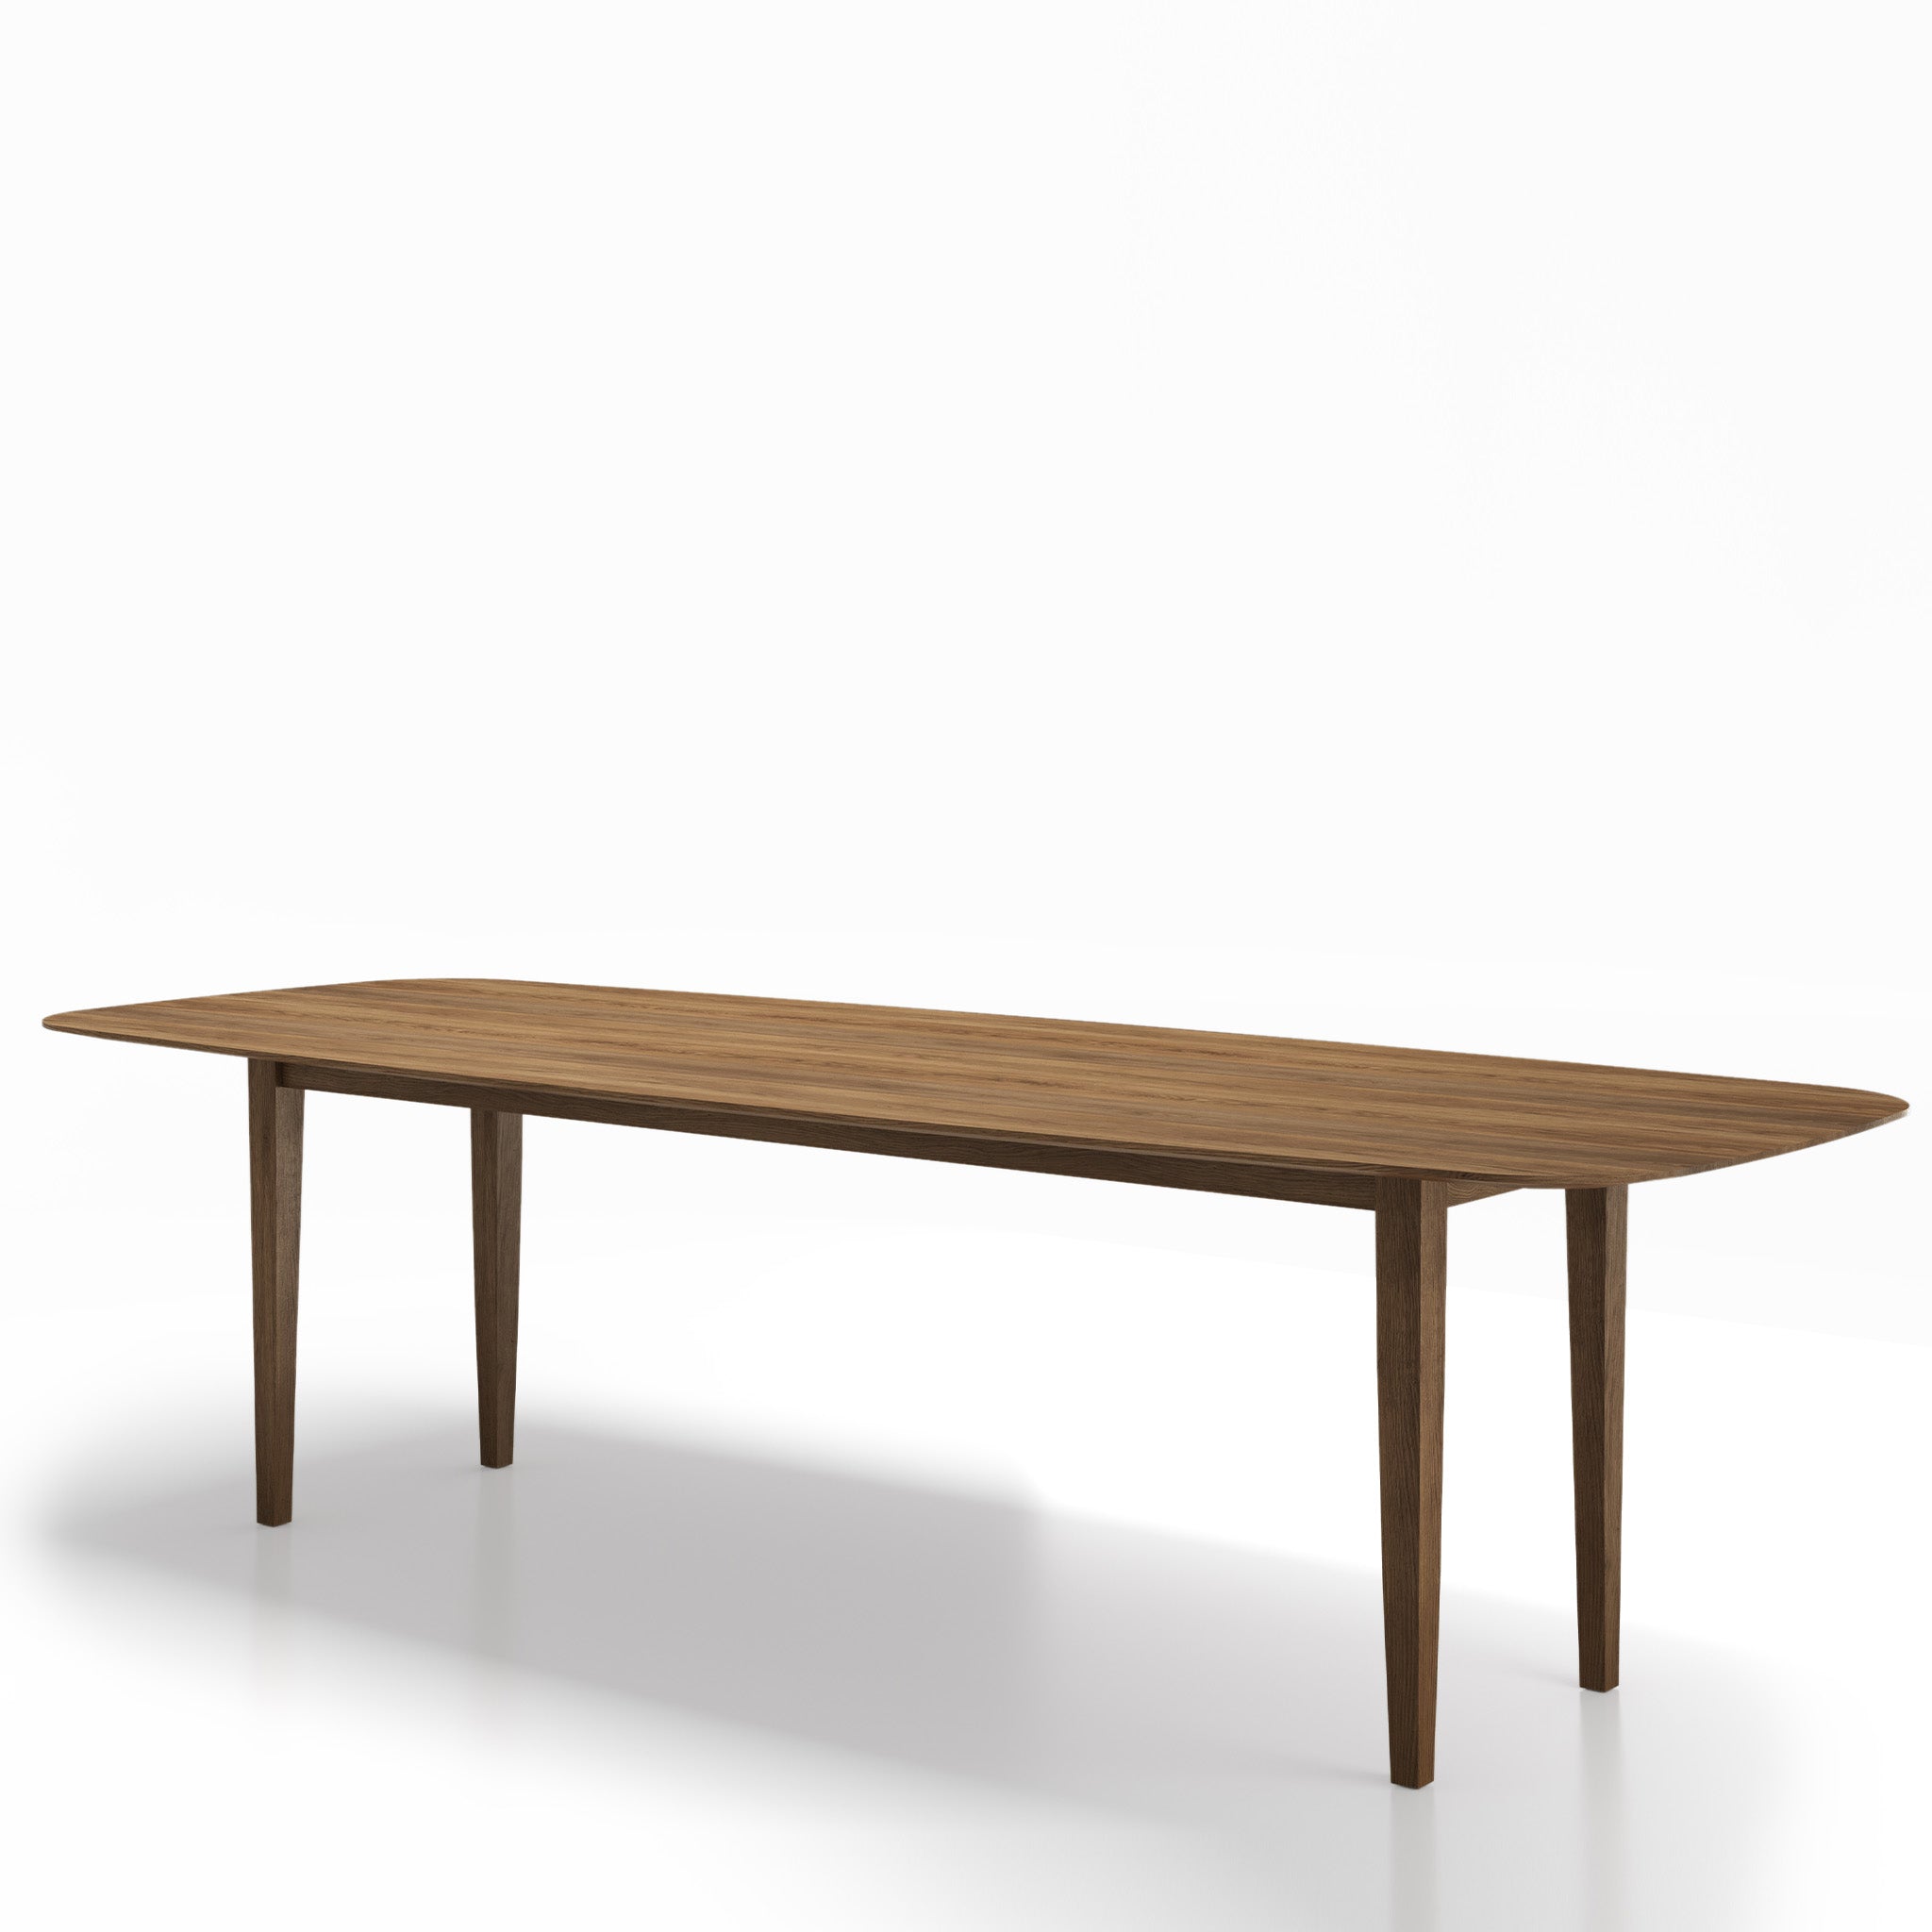 Kia's Table by Jacob Plejdrup for DK3